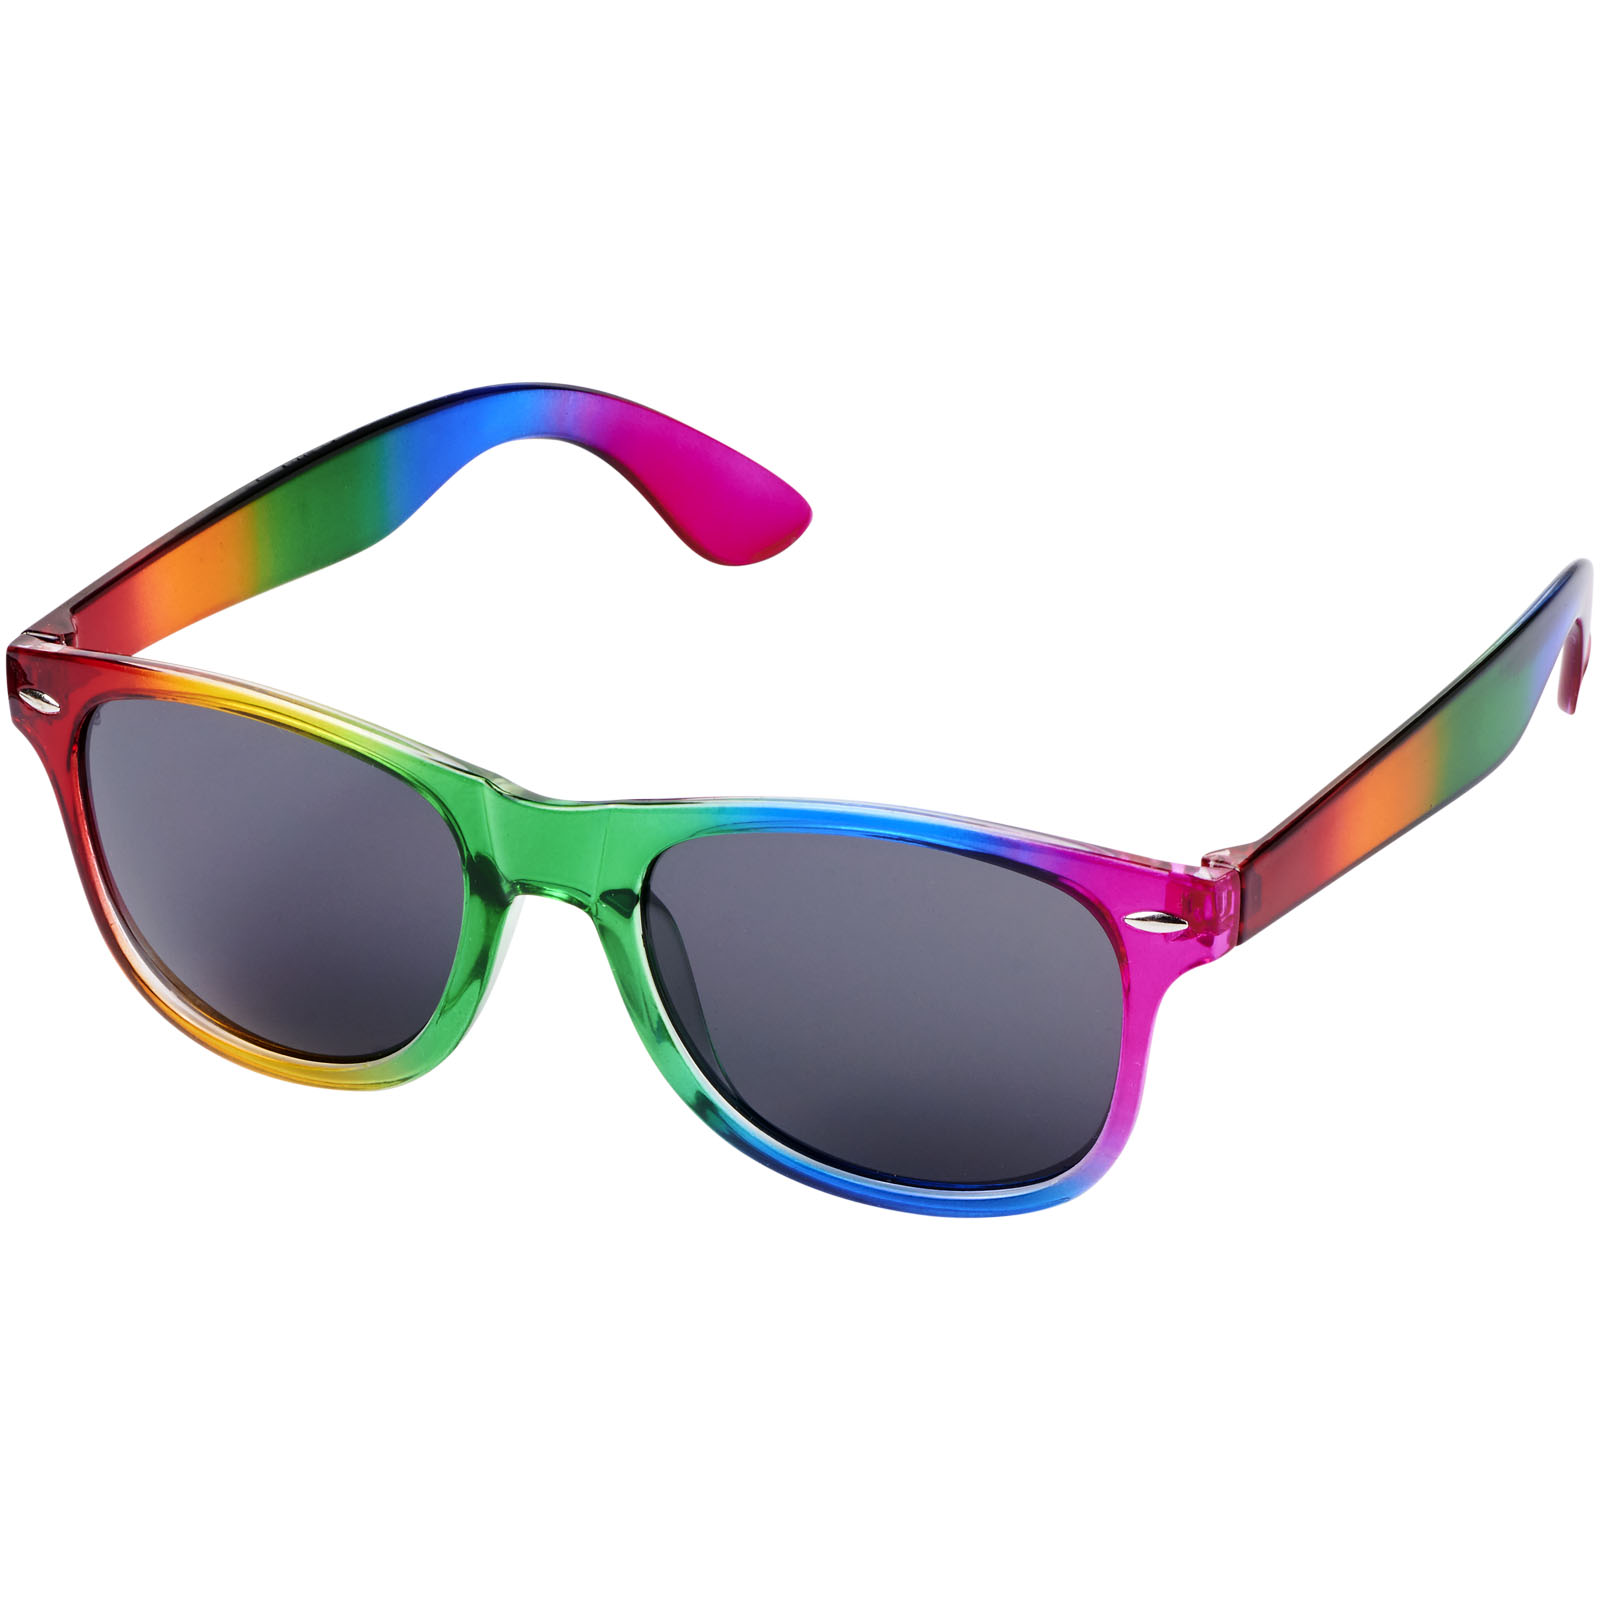 Sports & Leisure - Sun Ray rainbow sunglasses